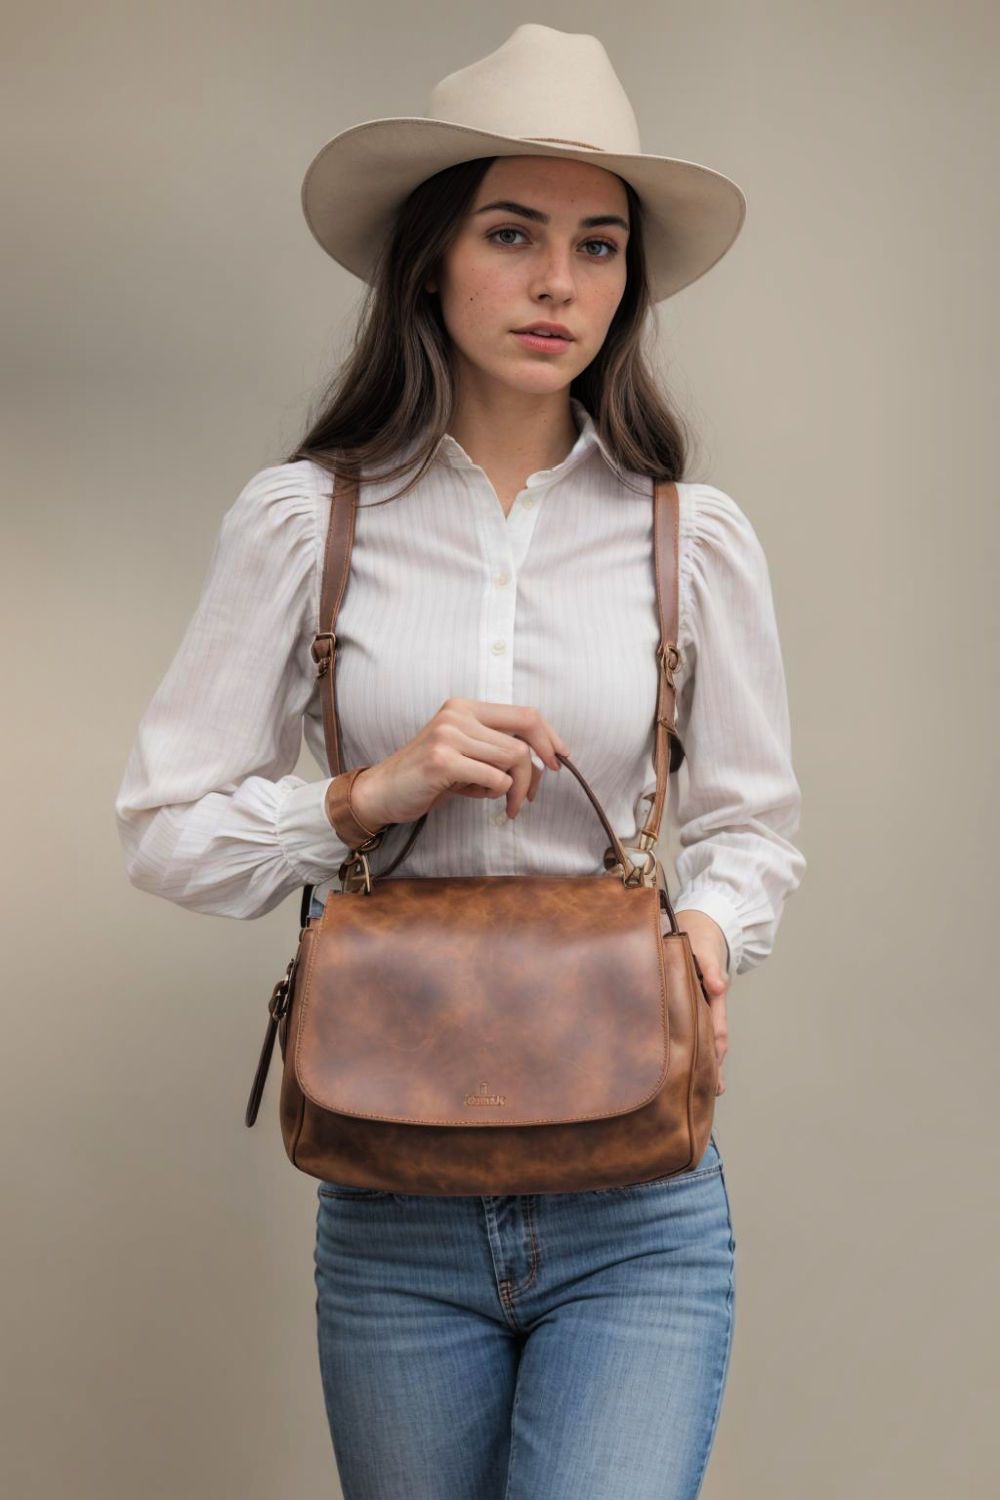 fashionable saddle bag purse